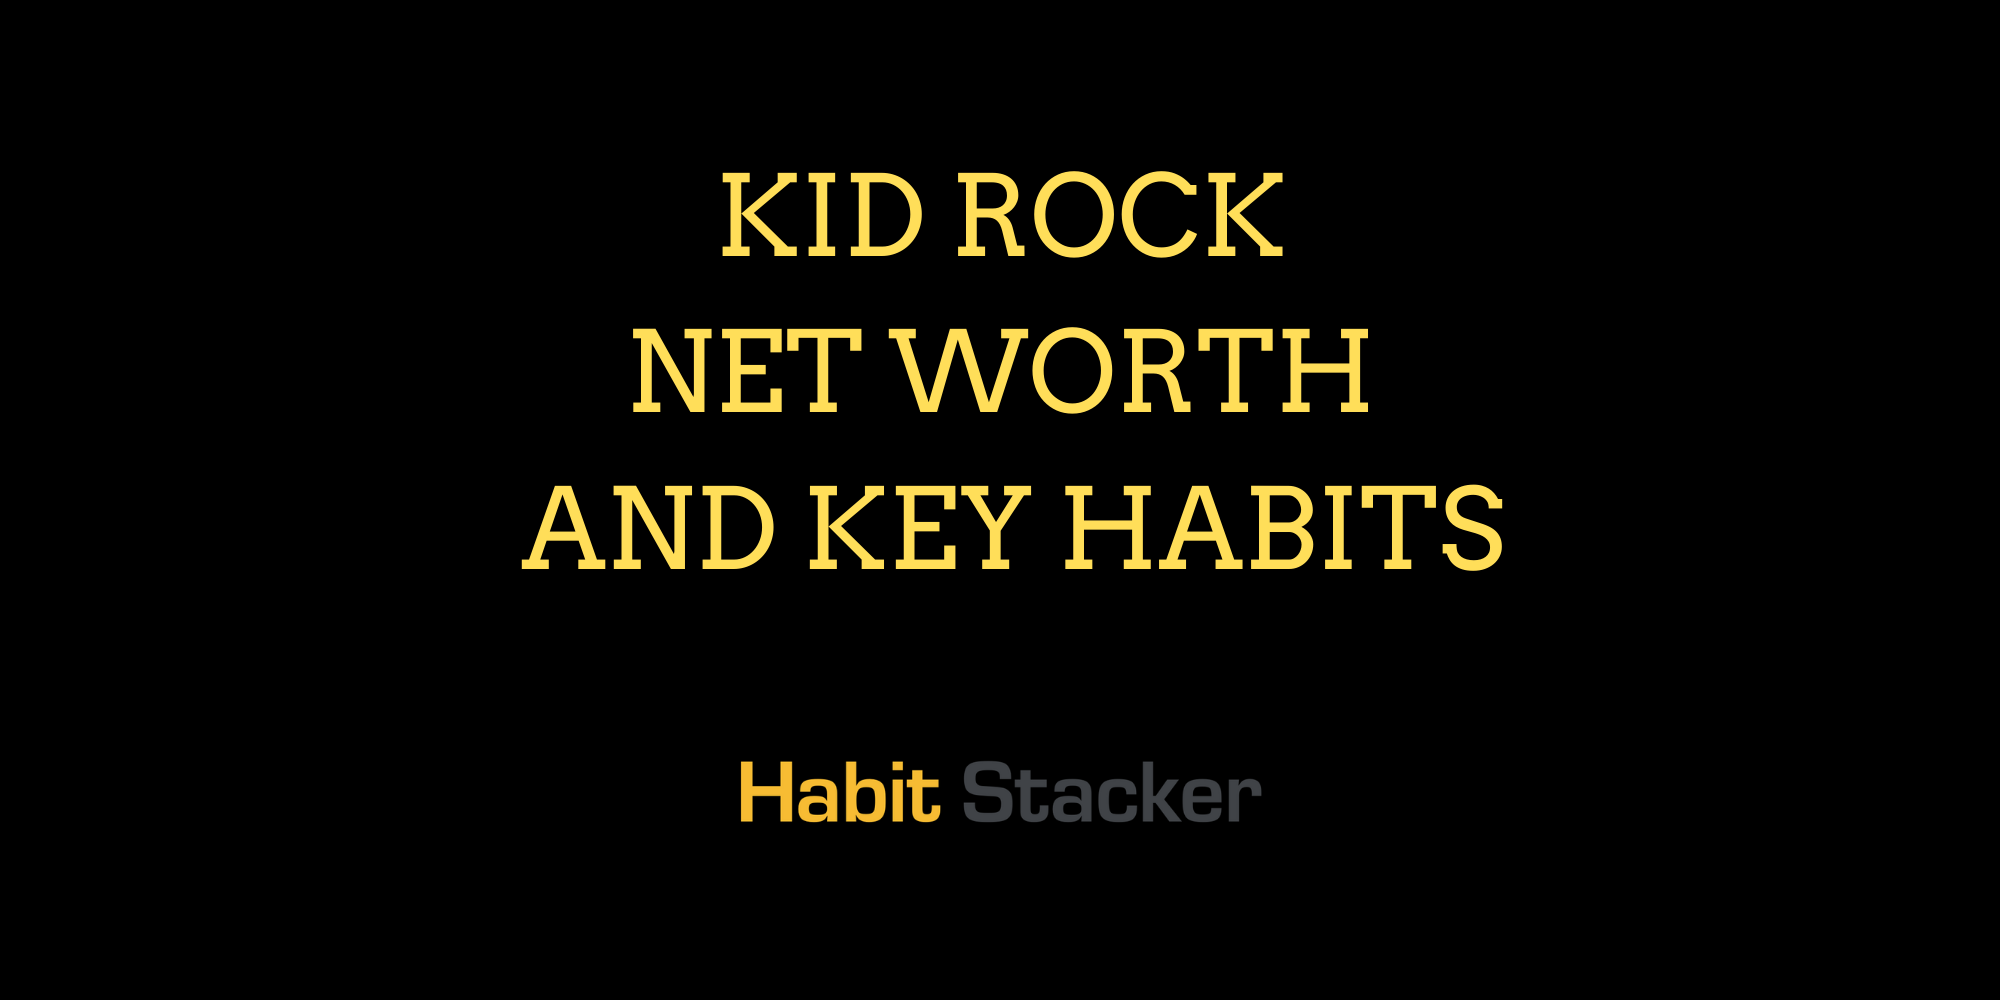 Kid Rock Net Worth and Key Habits